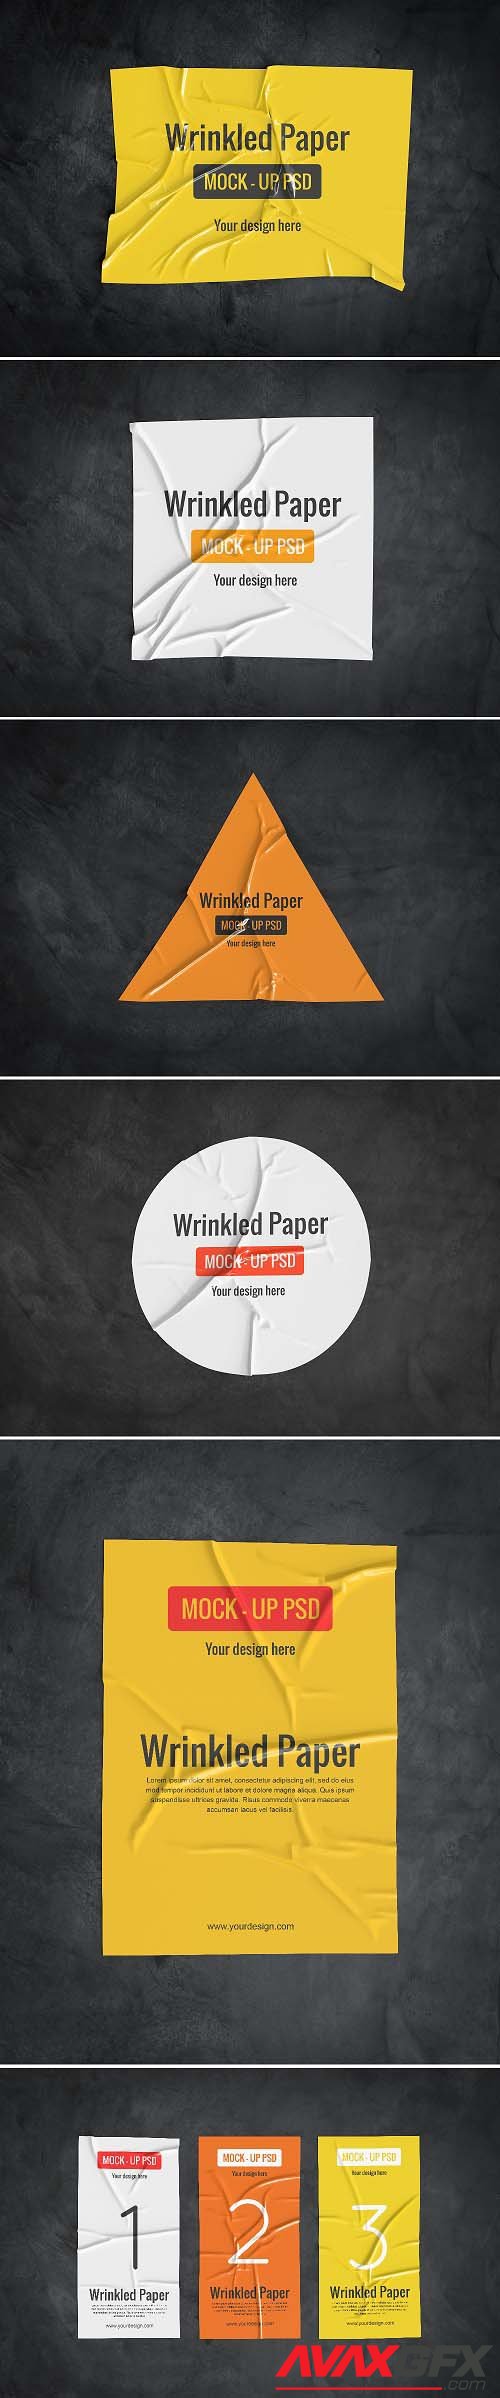 Wrinkled Paper Mockup Collection